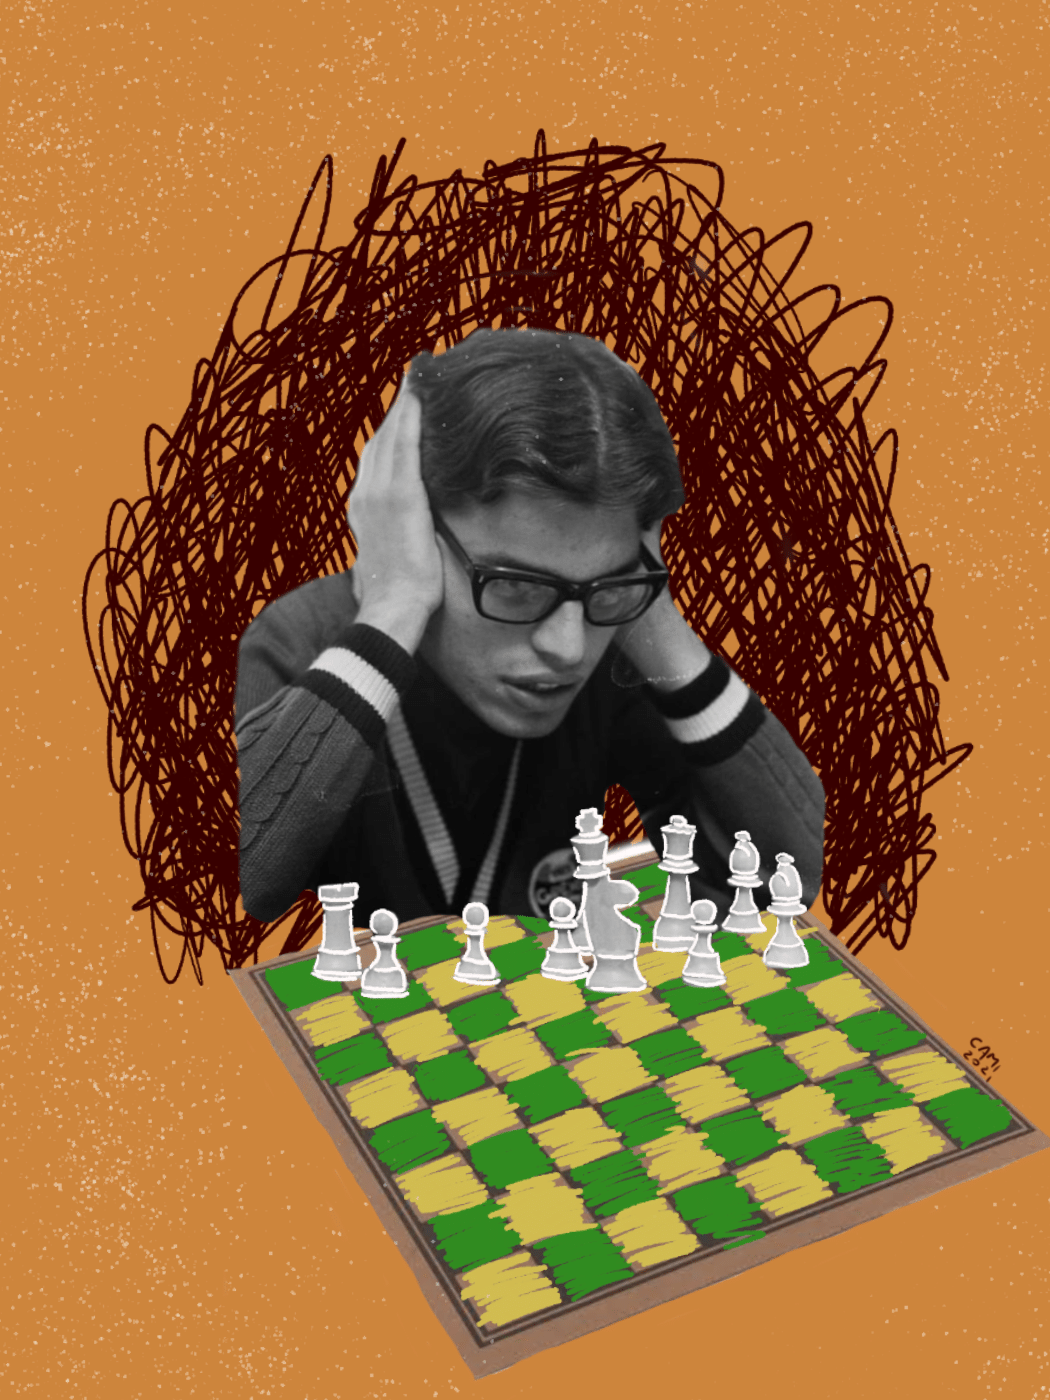 Série Fischer-Spassky (Campeonato Mundial de Xadrez 1972) - Peças